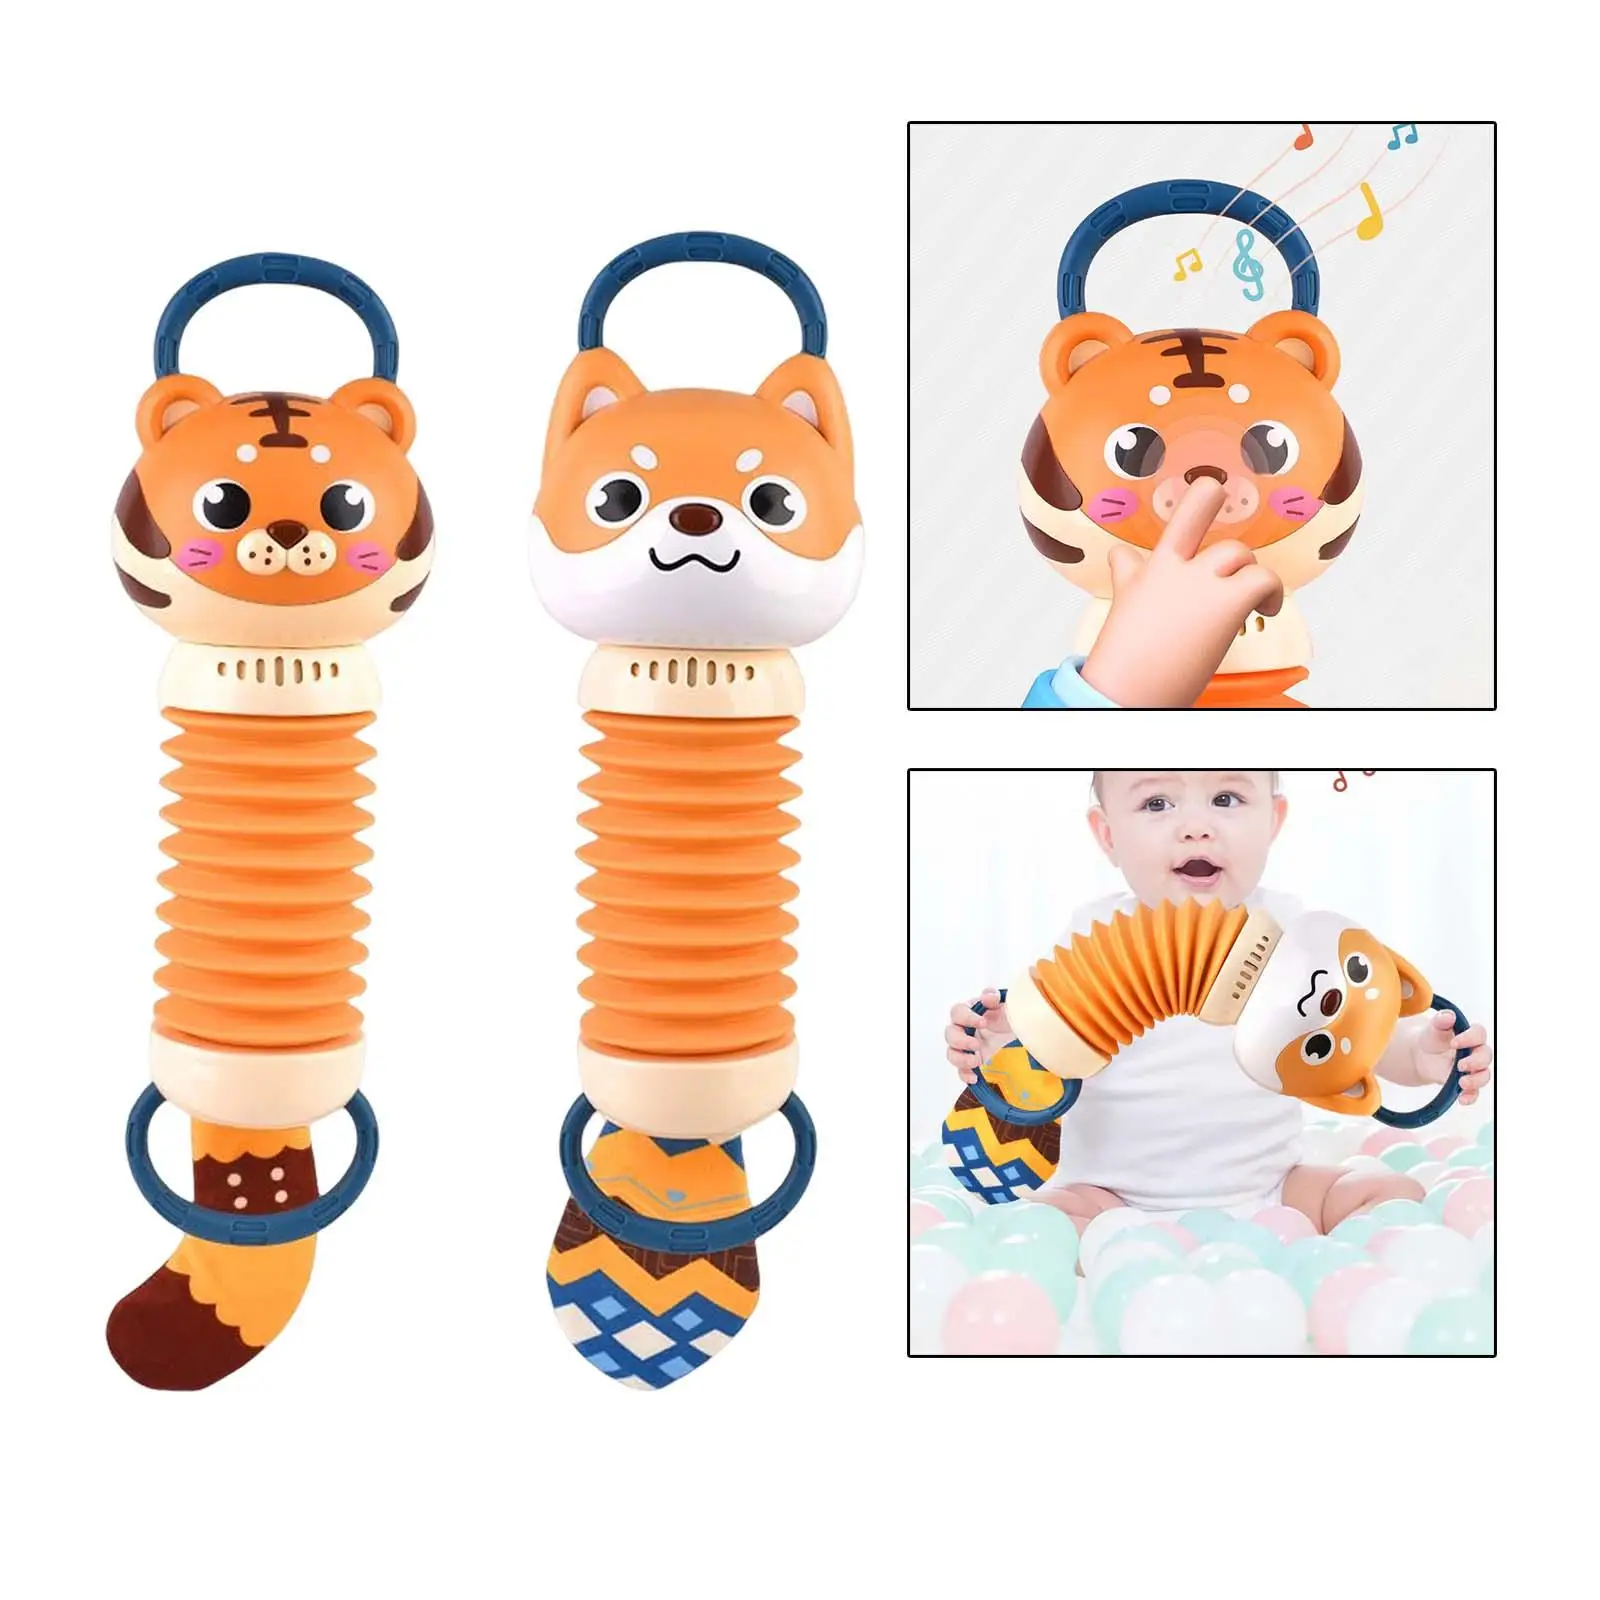 Accordion Toy Rattles Toys Developmental Hand Grip Educational Sensory Toy Soft